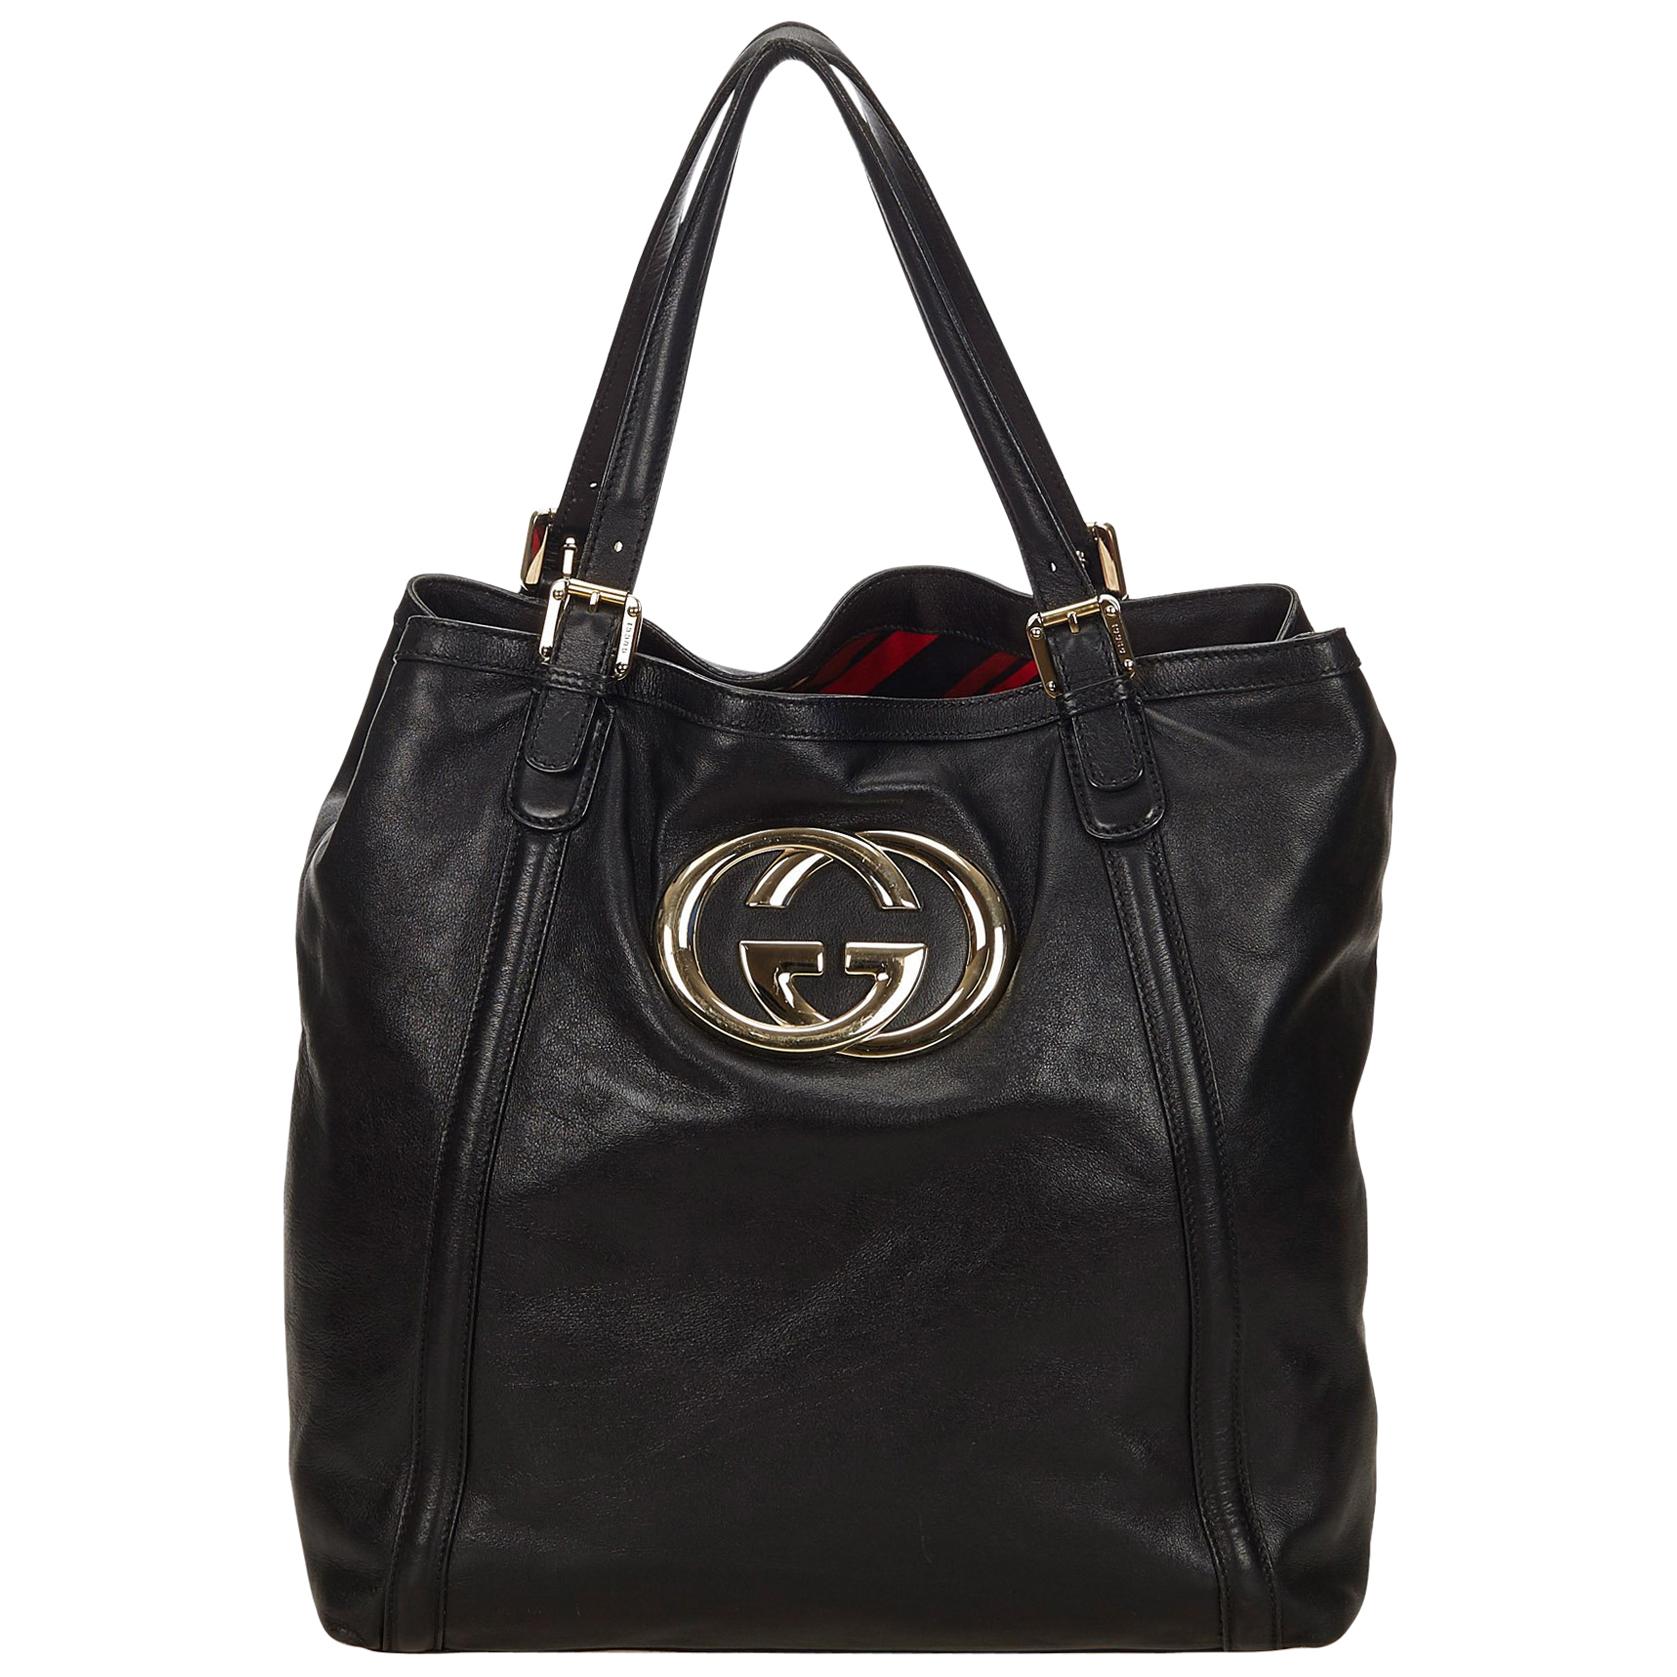 Gucci Black Leather Britt Tote Bag